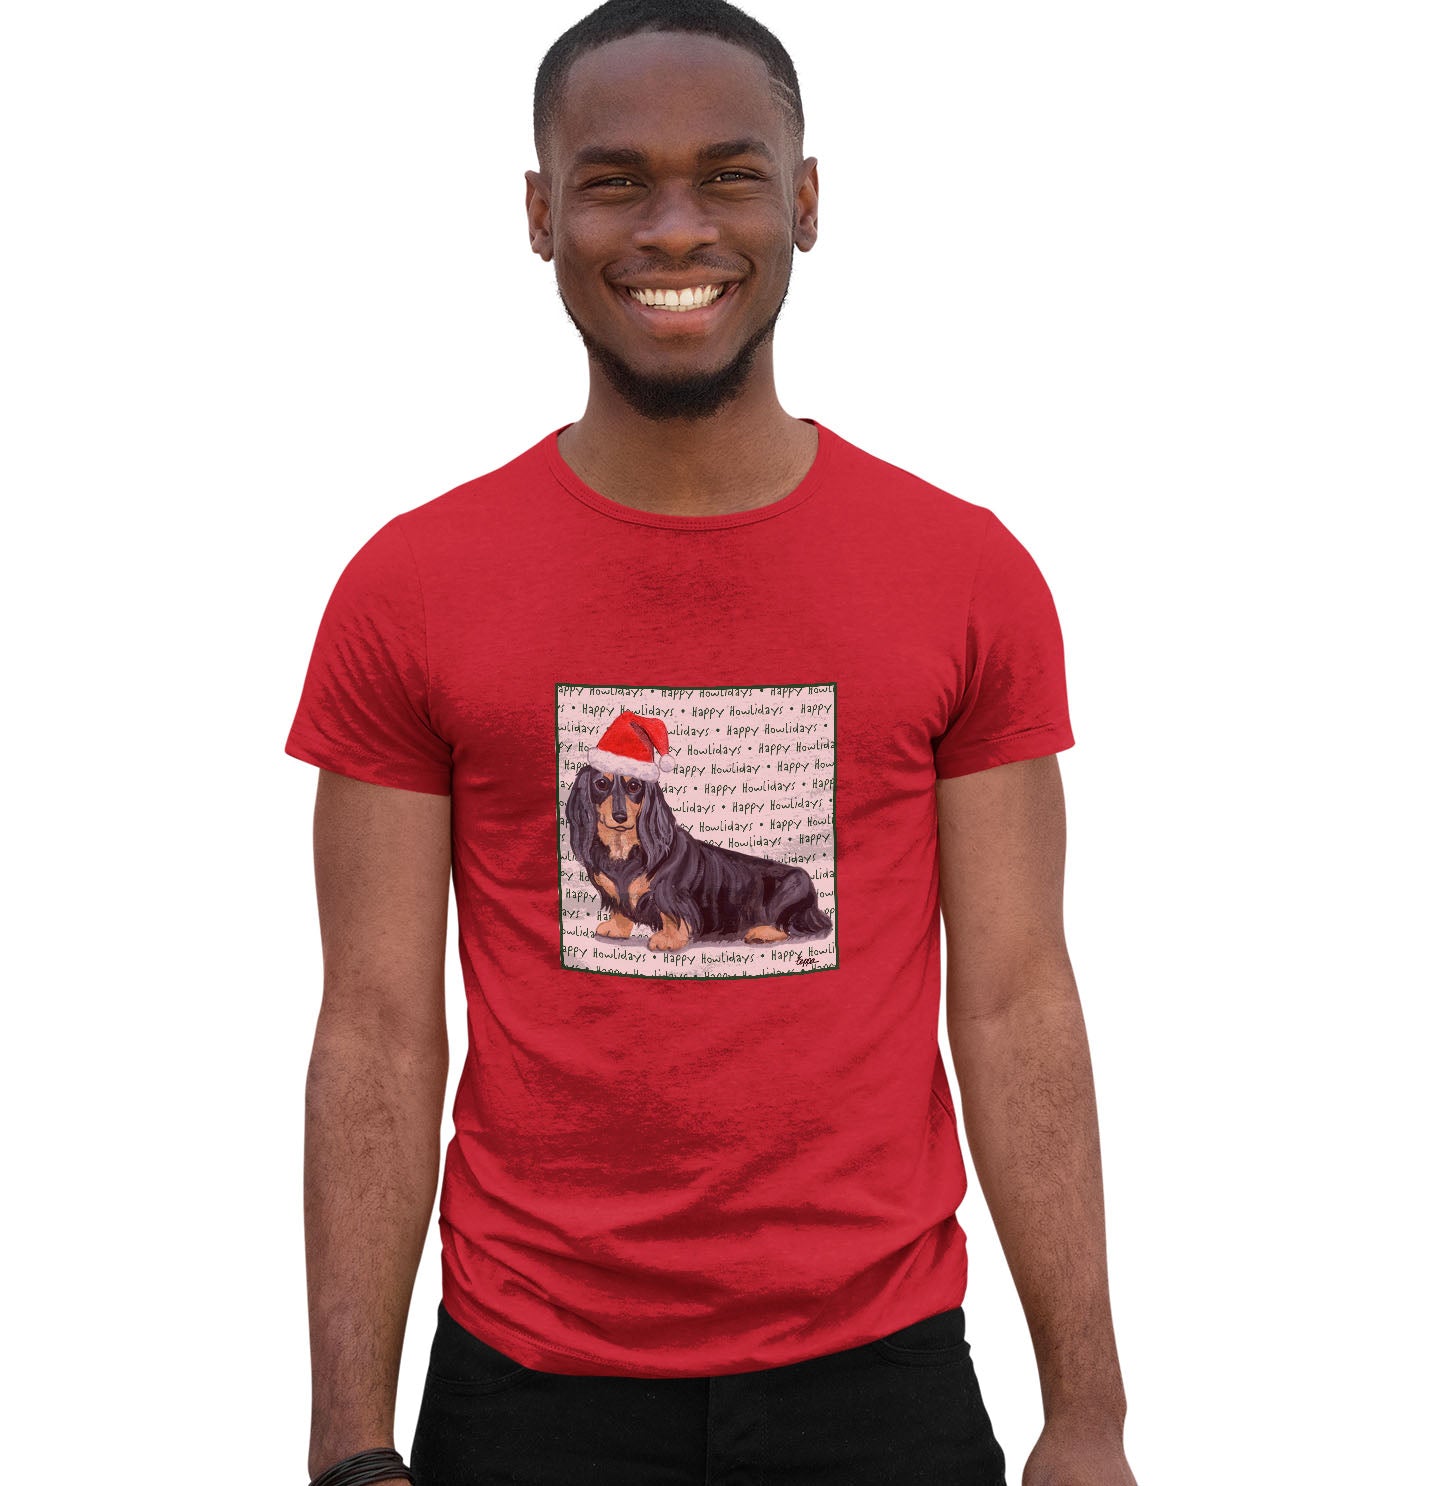 Dachshund (Black Long Haired) Happy Howlidays Text - Adult Unisex T-Shirt